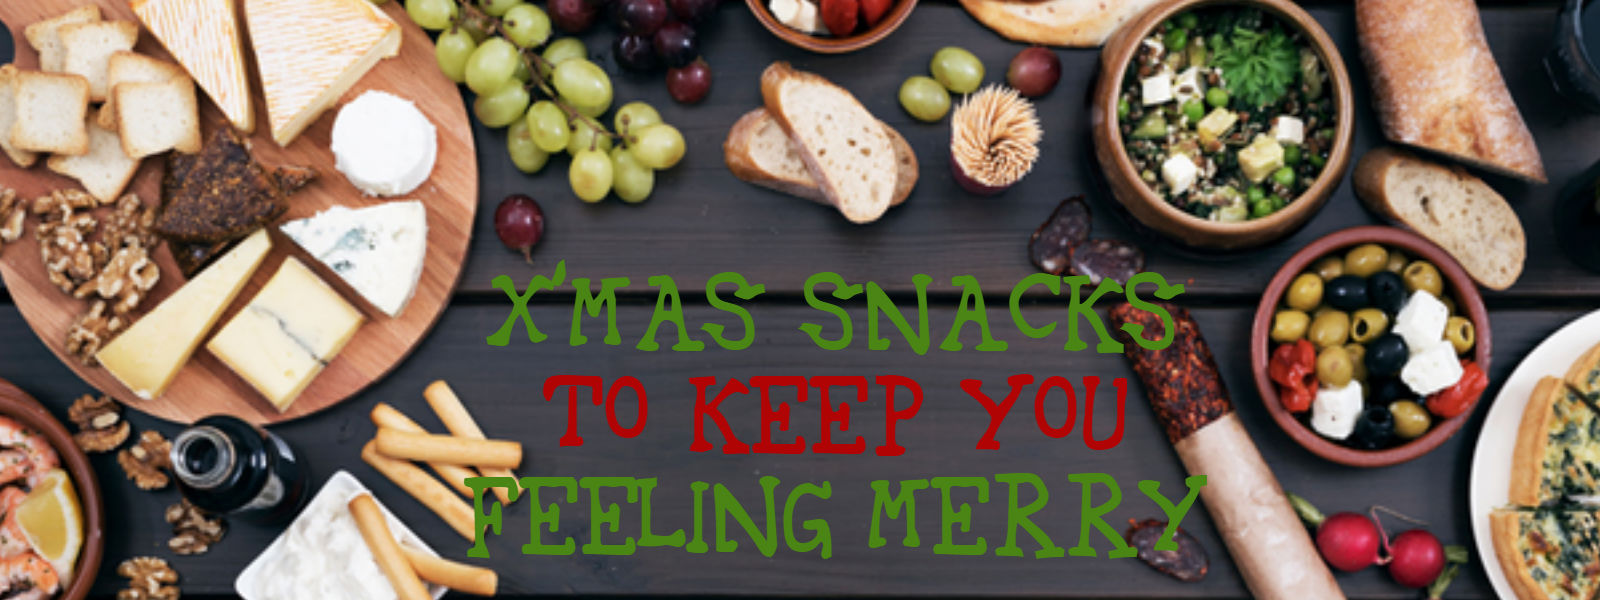 6  Christmas snacks to keep you feeling merry